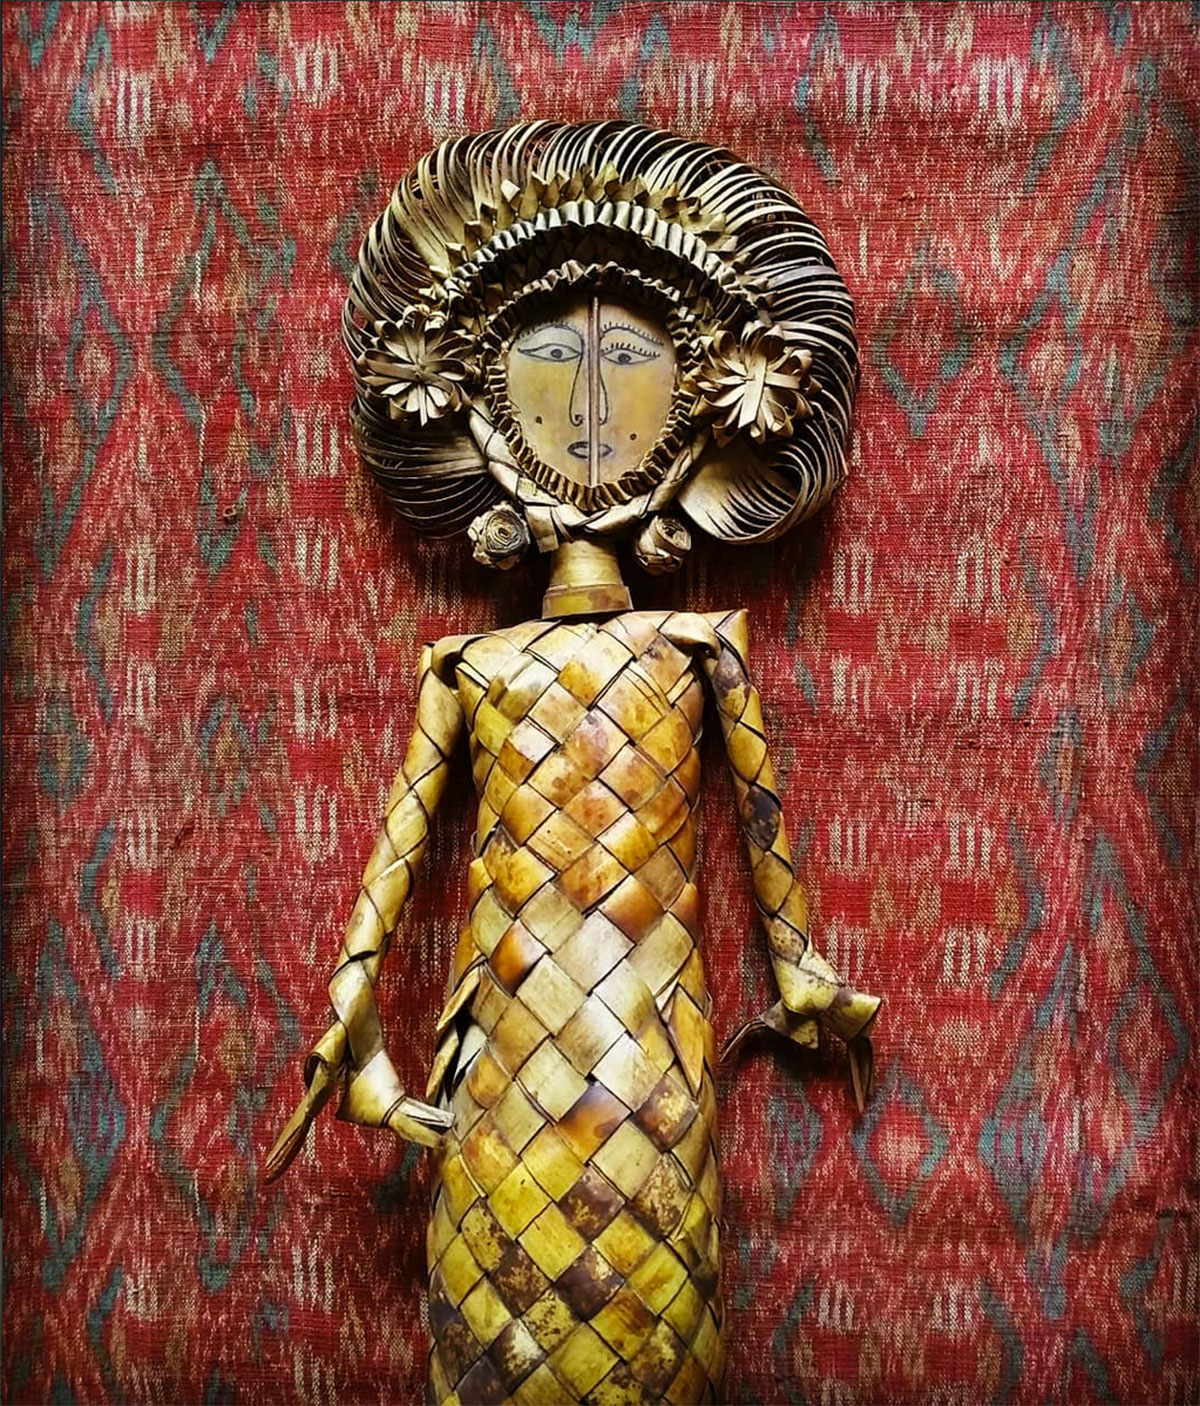 Balinese Cili figurine of the Goddess Dewi Sri